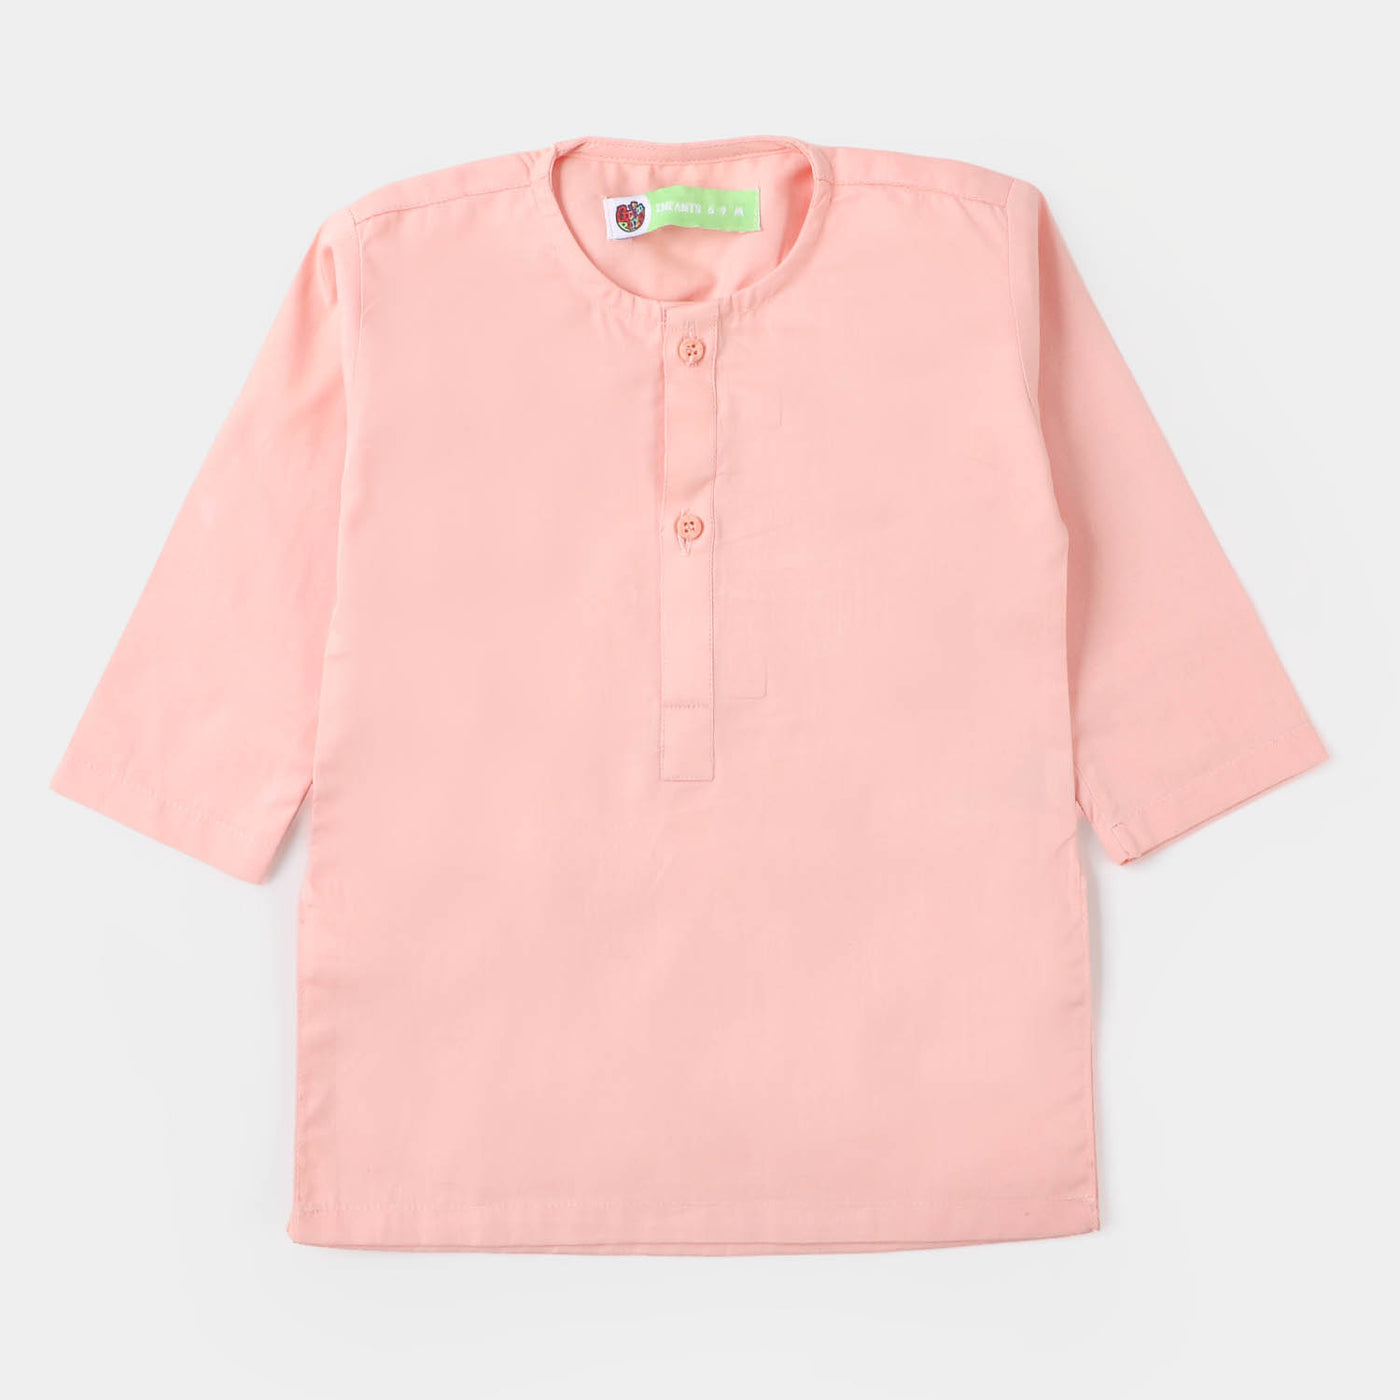 Infant Boys Cotton Basic Kurta - Pink